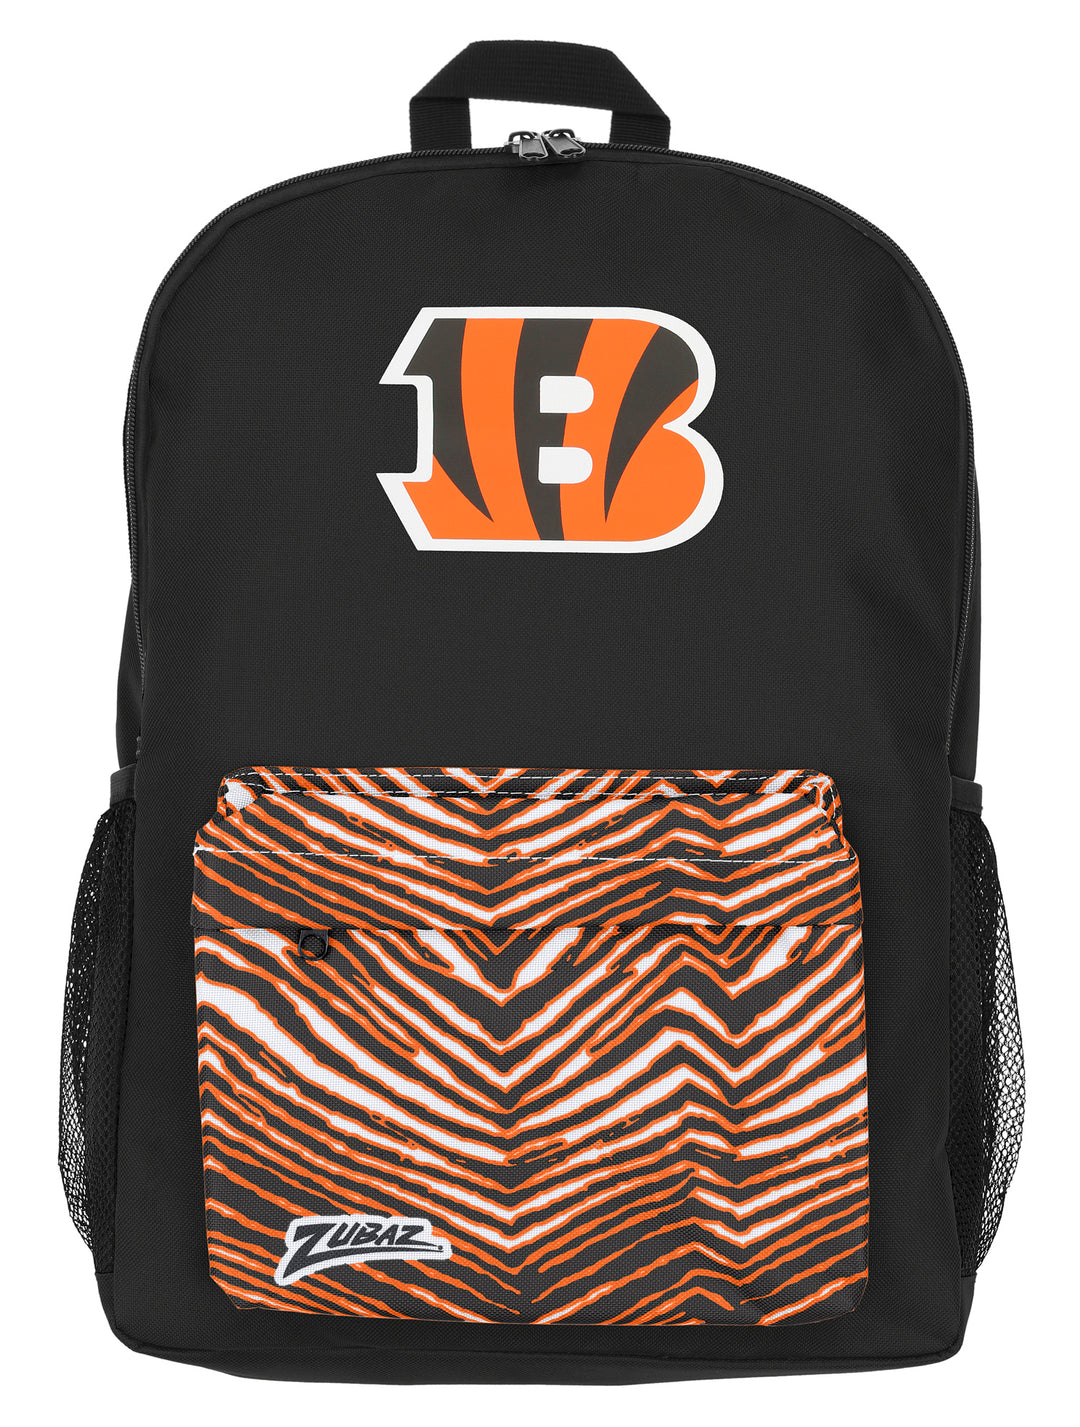 FOCO X ZUBAZ NFL Cincinnati Bengals Zebra 2 Collab Printed Backpack